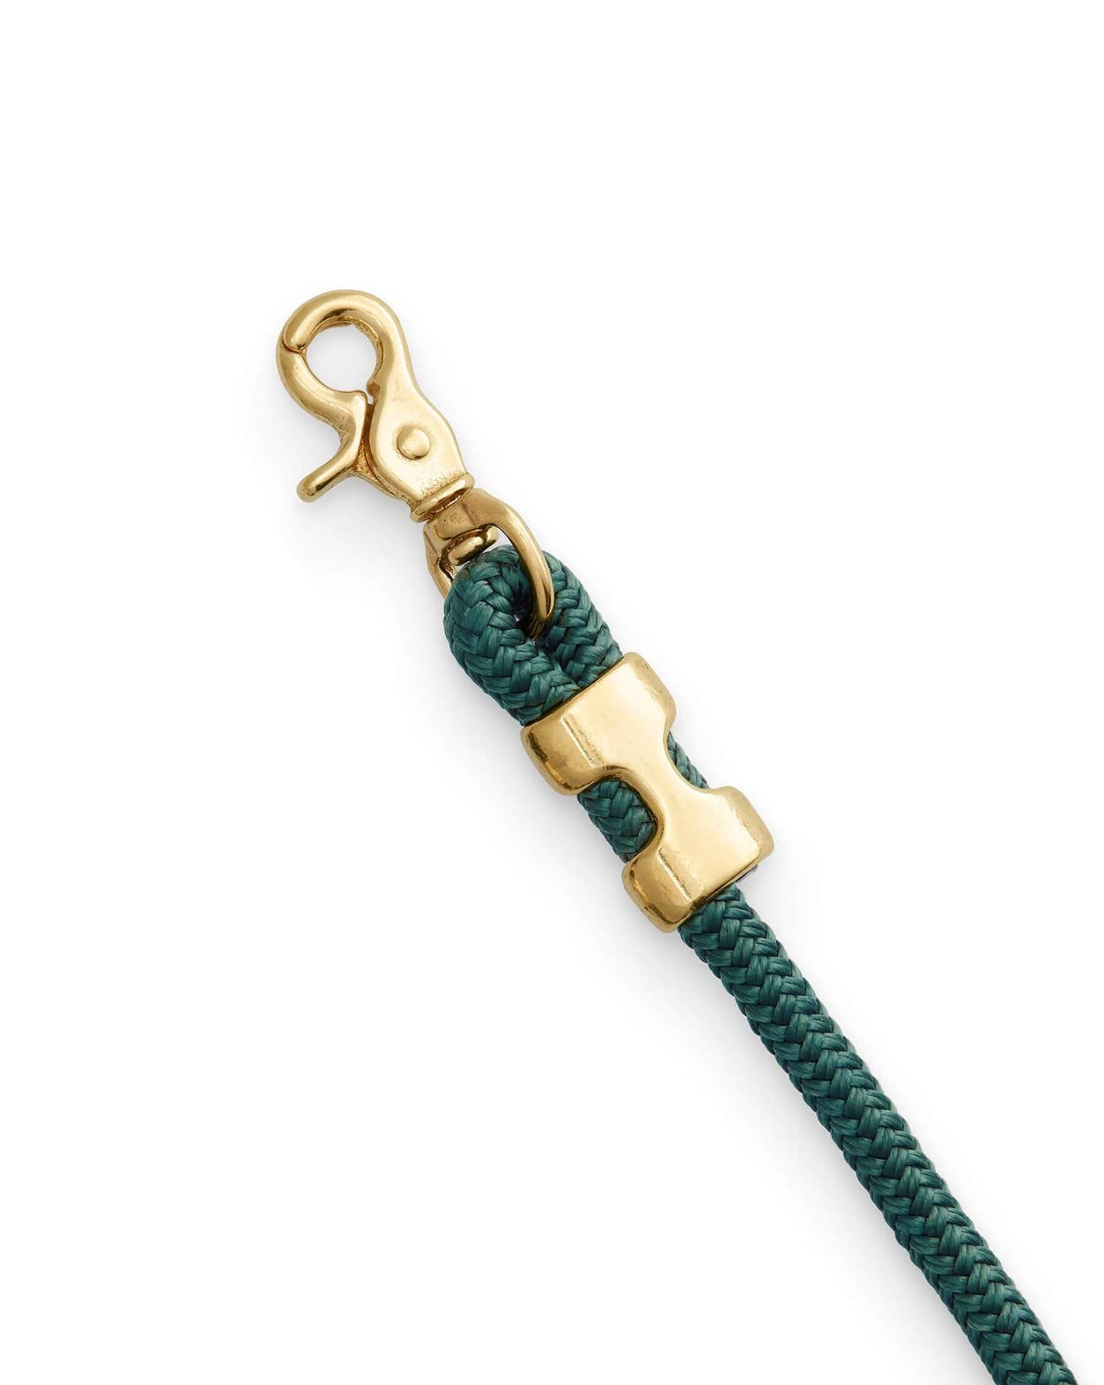 The Foggy Dog Evergreen Marine Rope Dog Leash